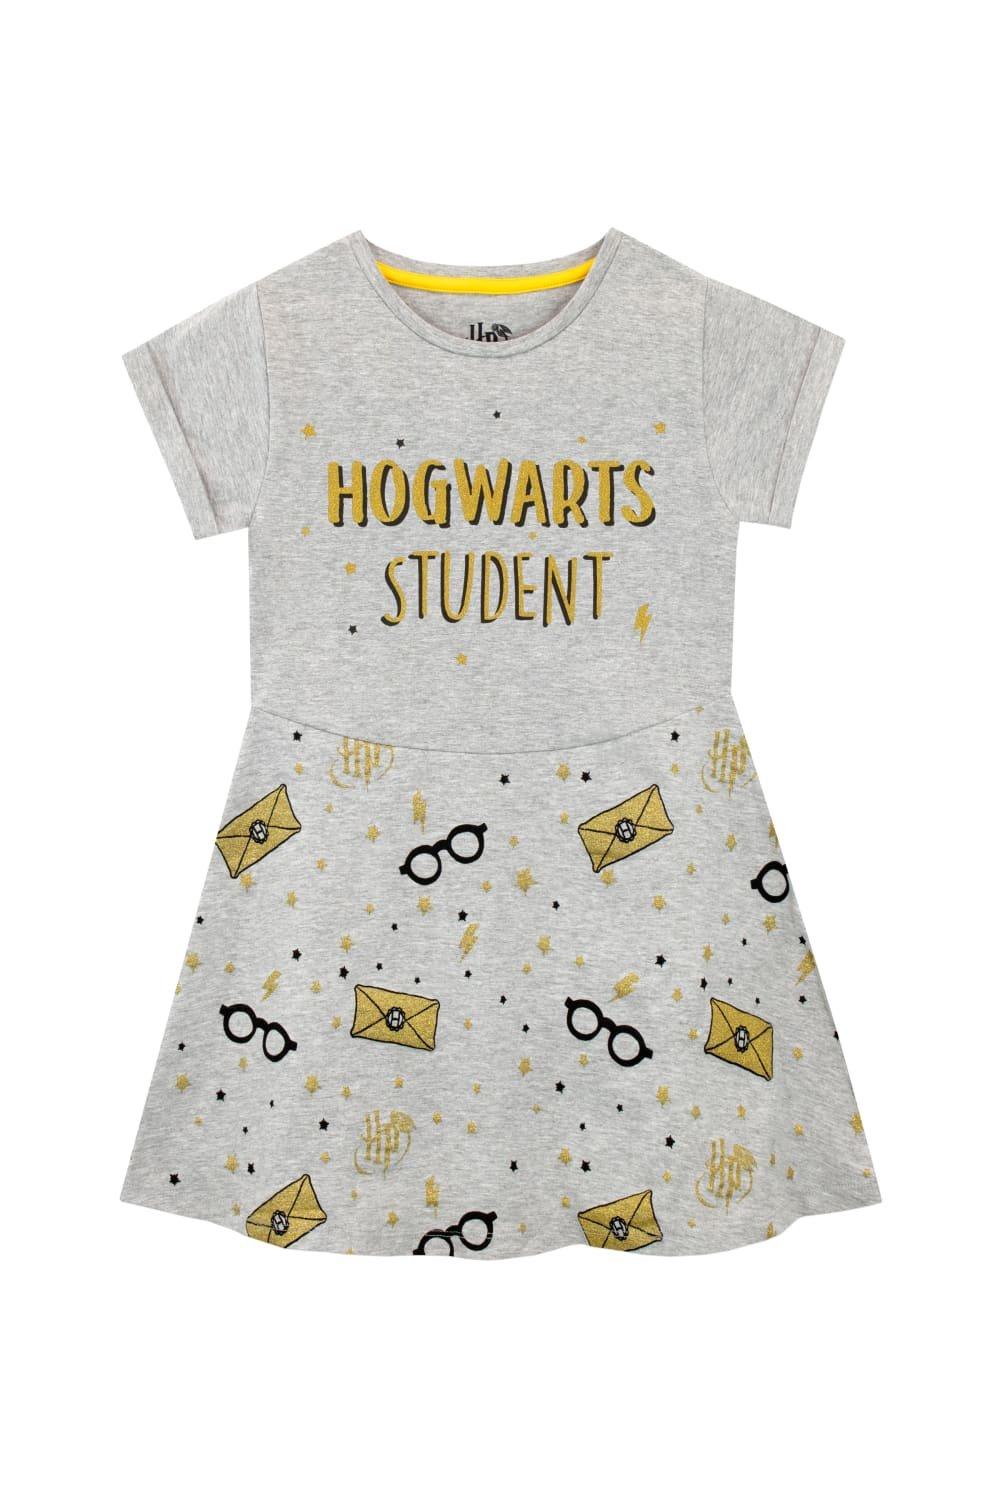 Hogwarts Student Dress